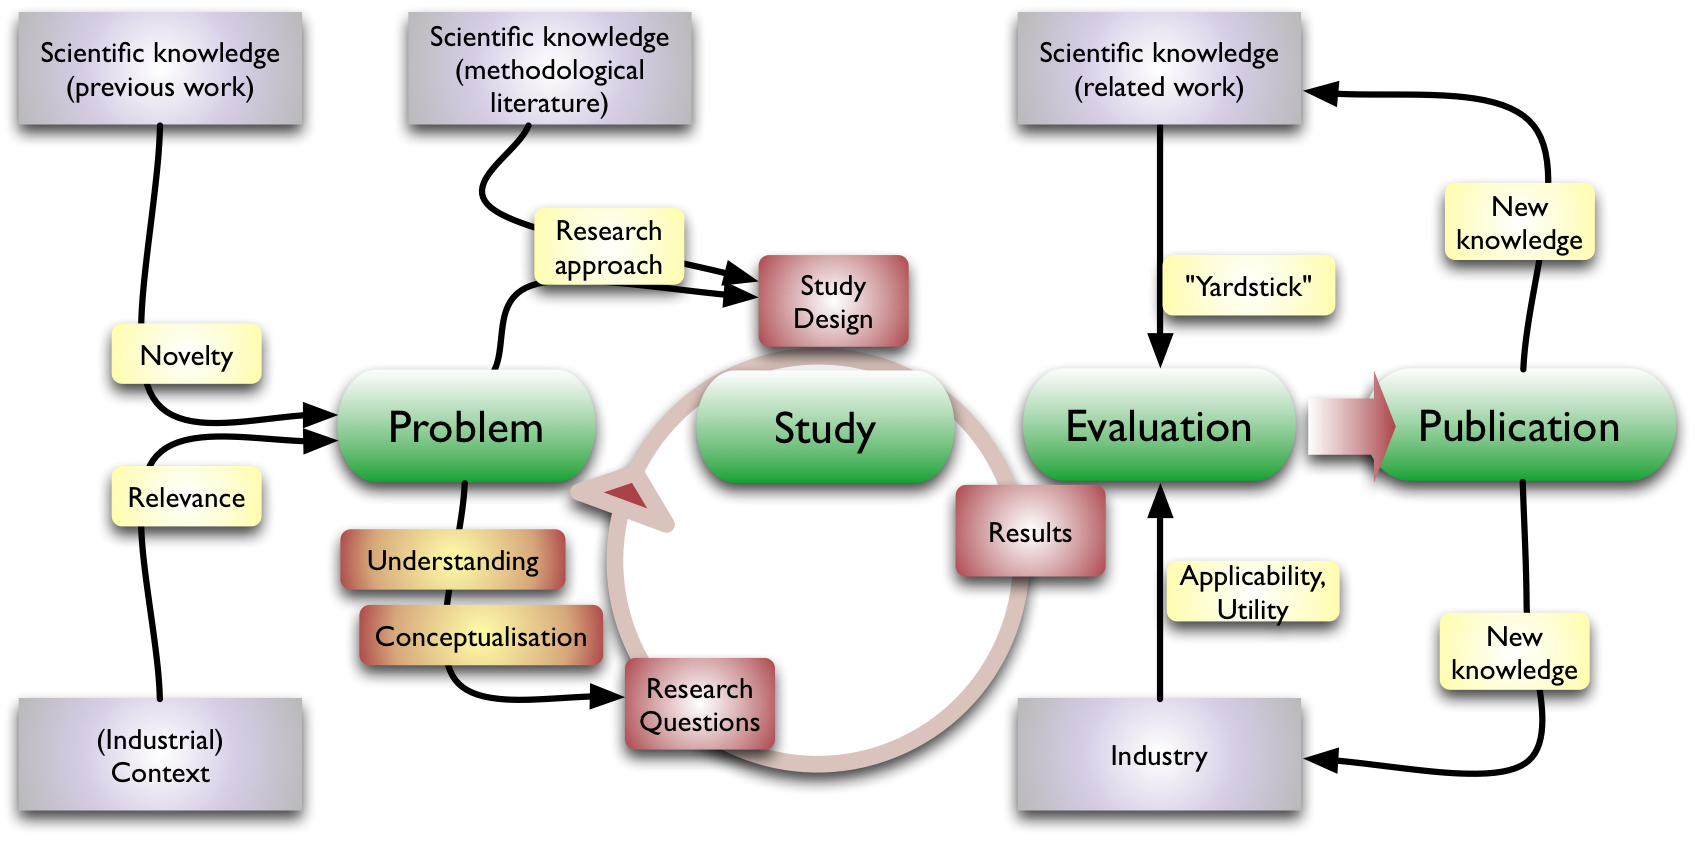 Dissertation Methodology